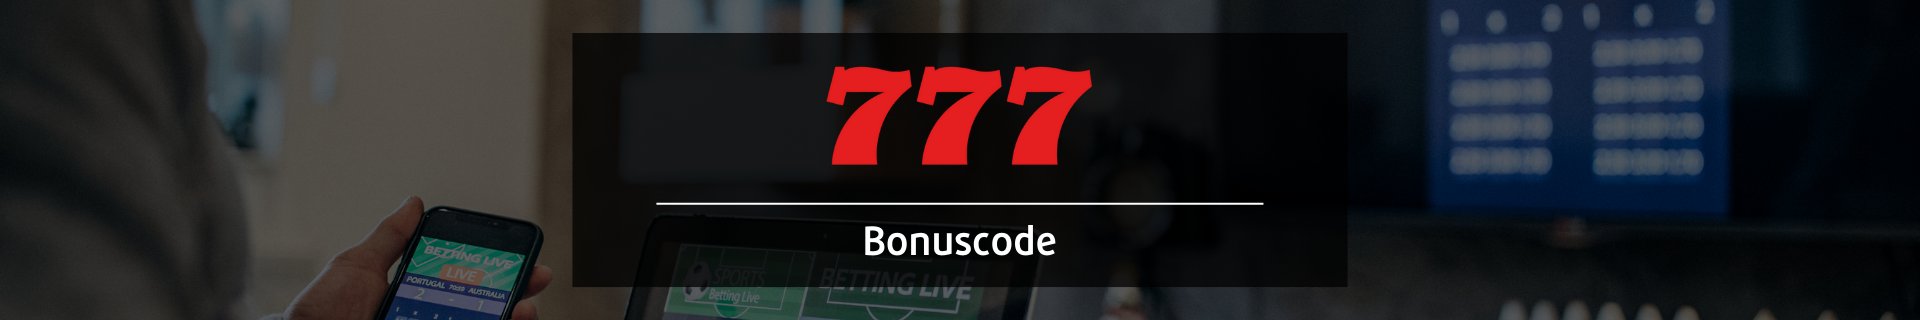 777 bonus code